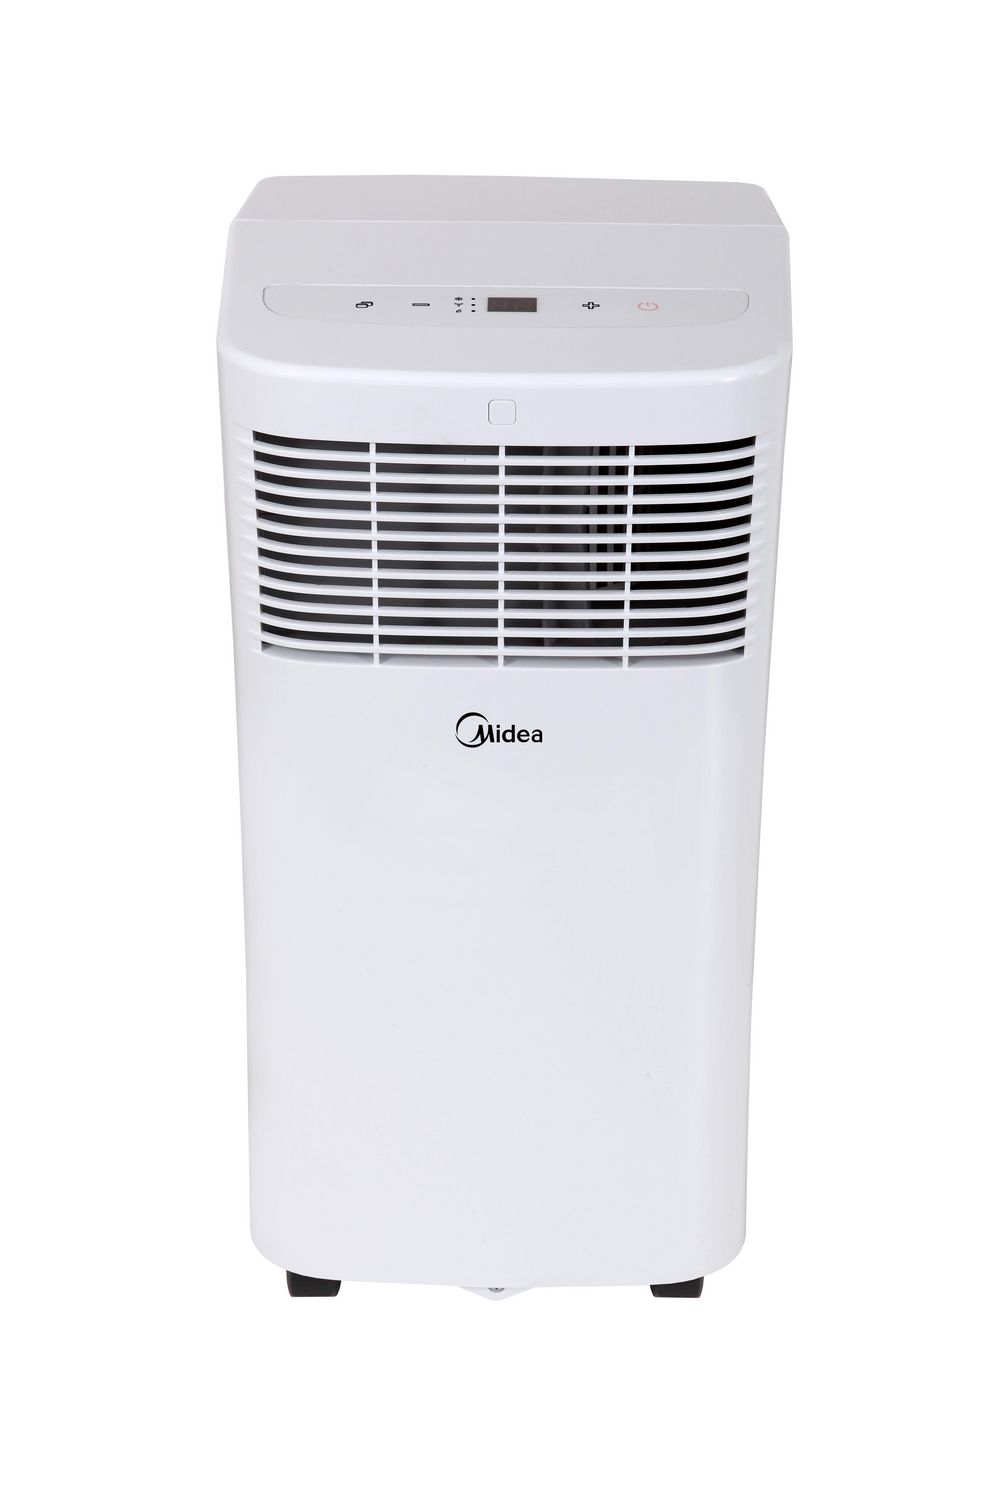 Midea 6000 BTU 3-in-1 Portable Air Conditioner, Dehumidifier, Fan, for